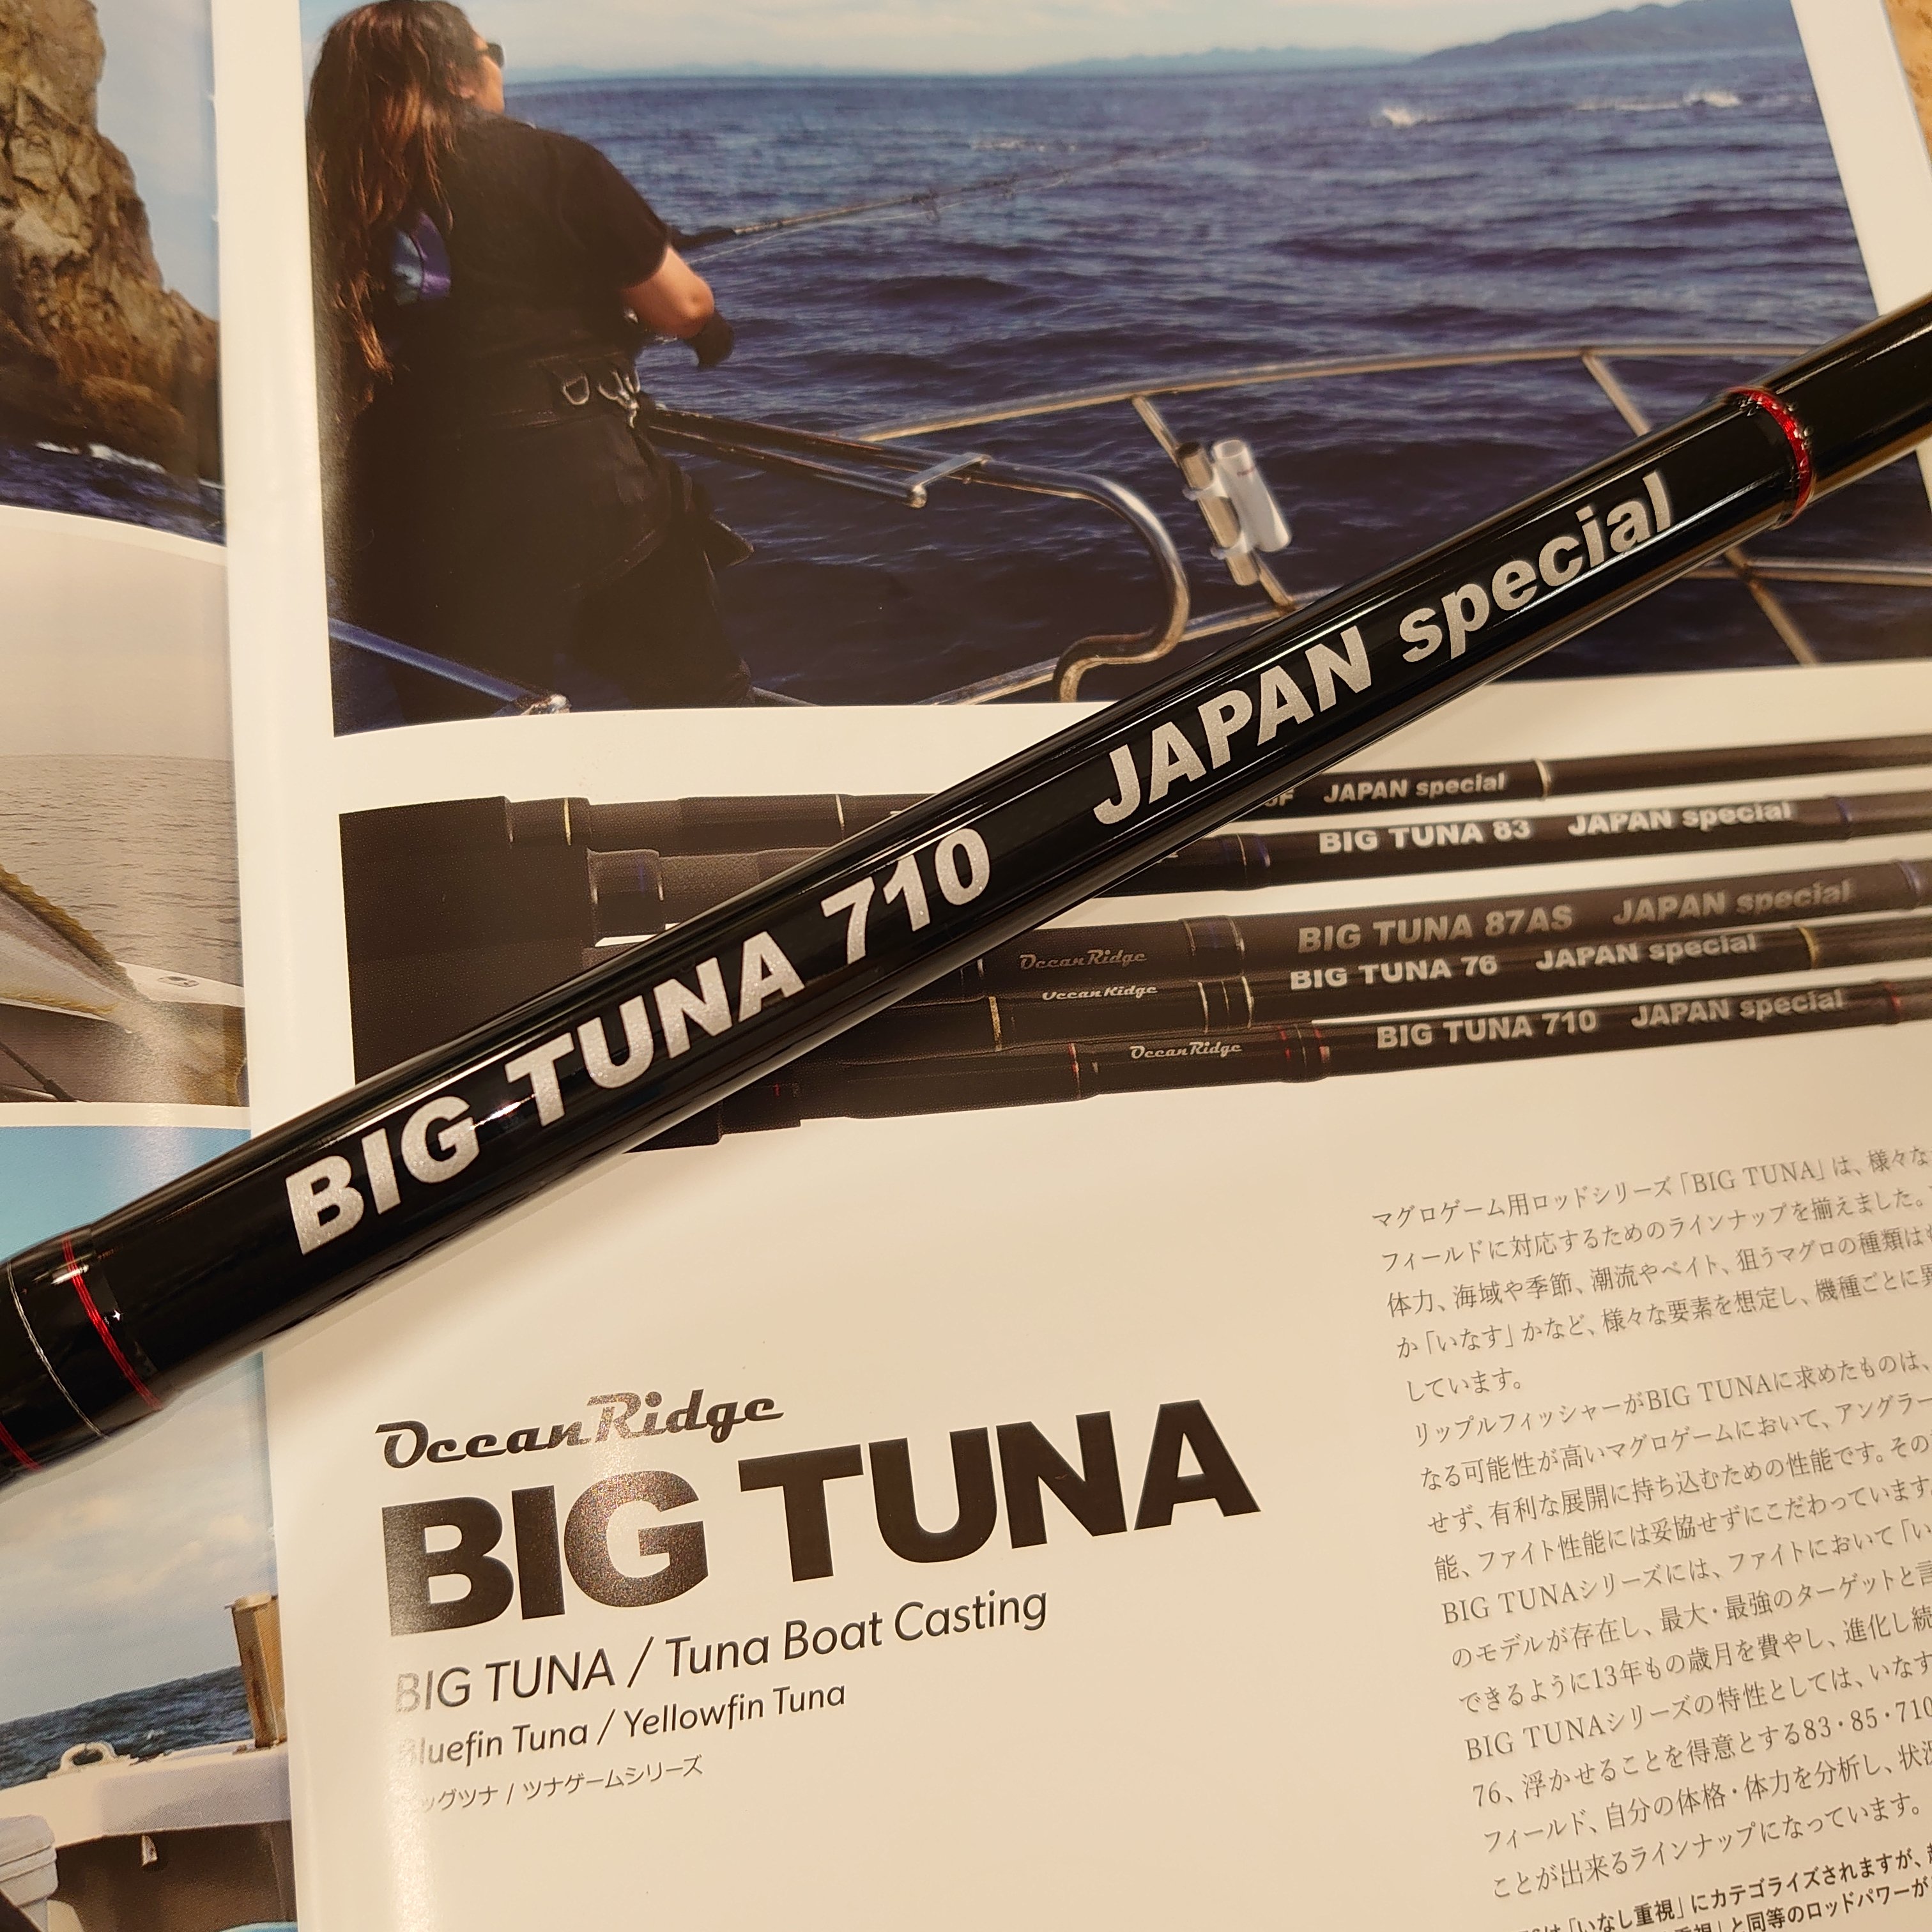 BIG TUNA 710 Japan Special